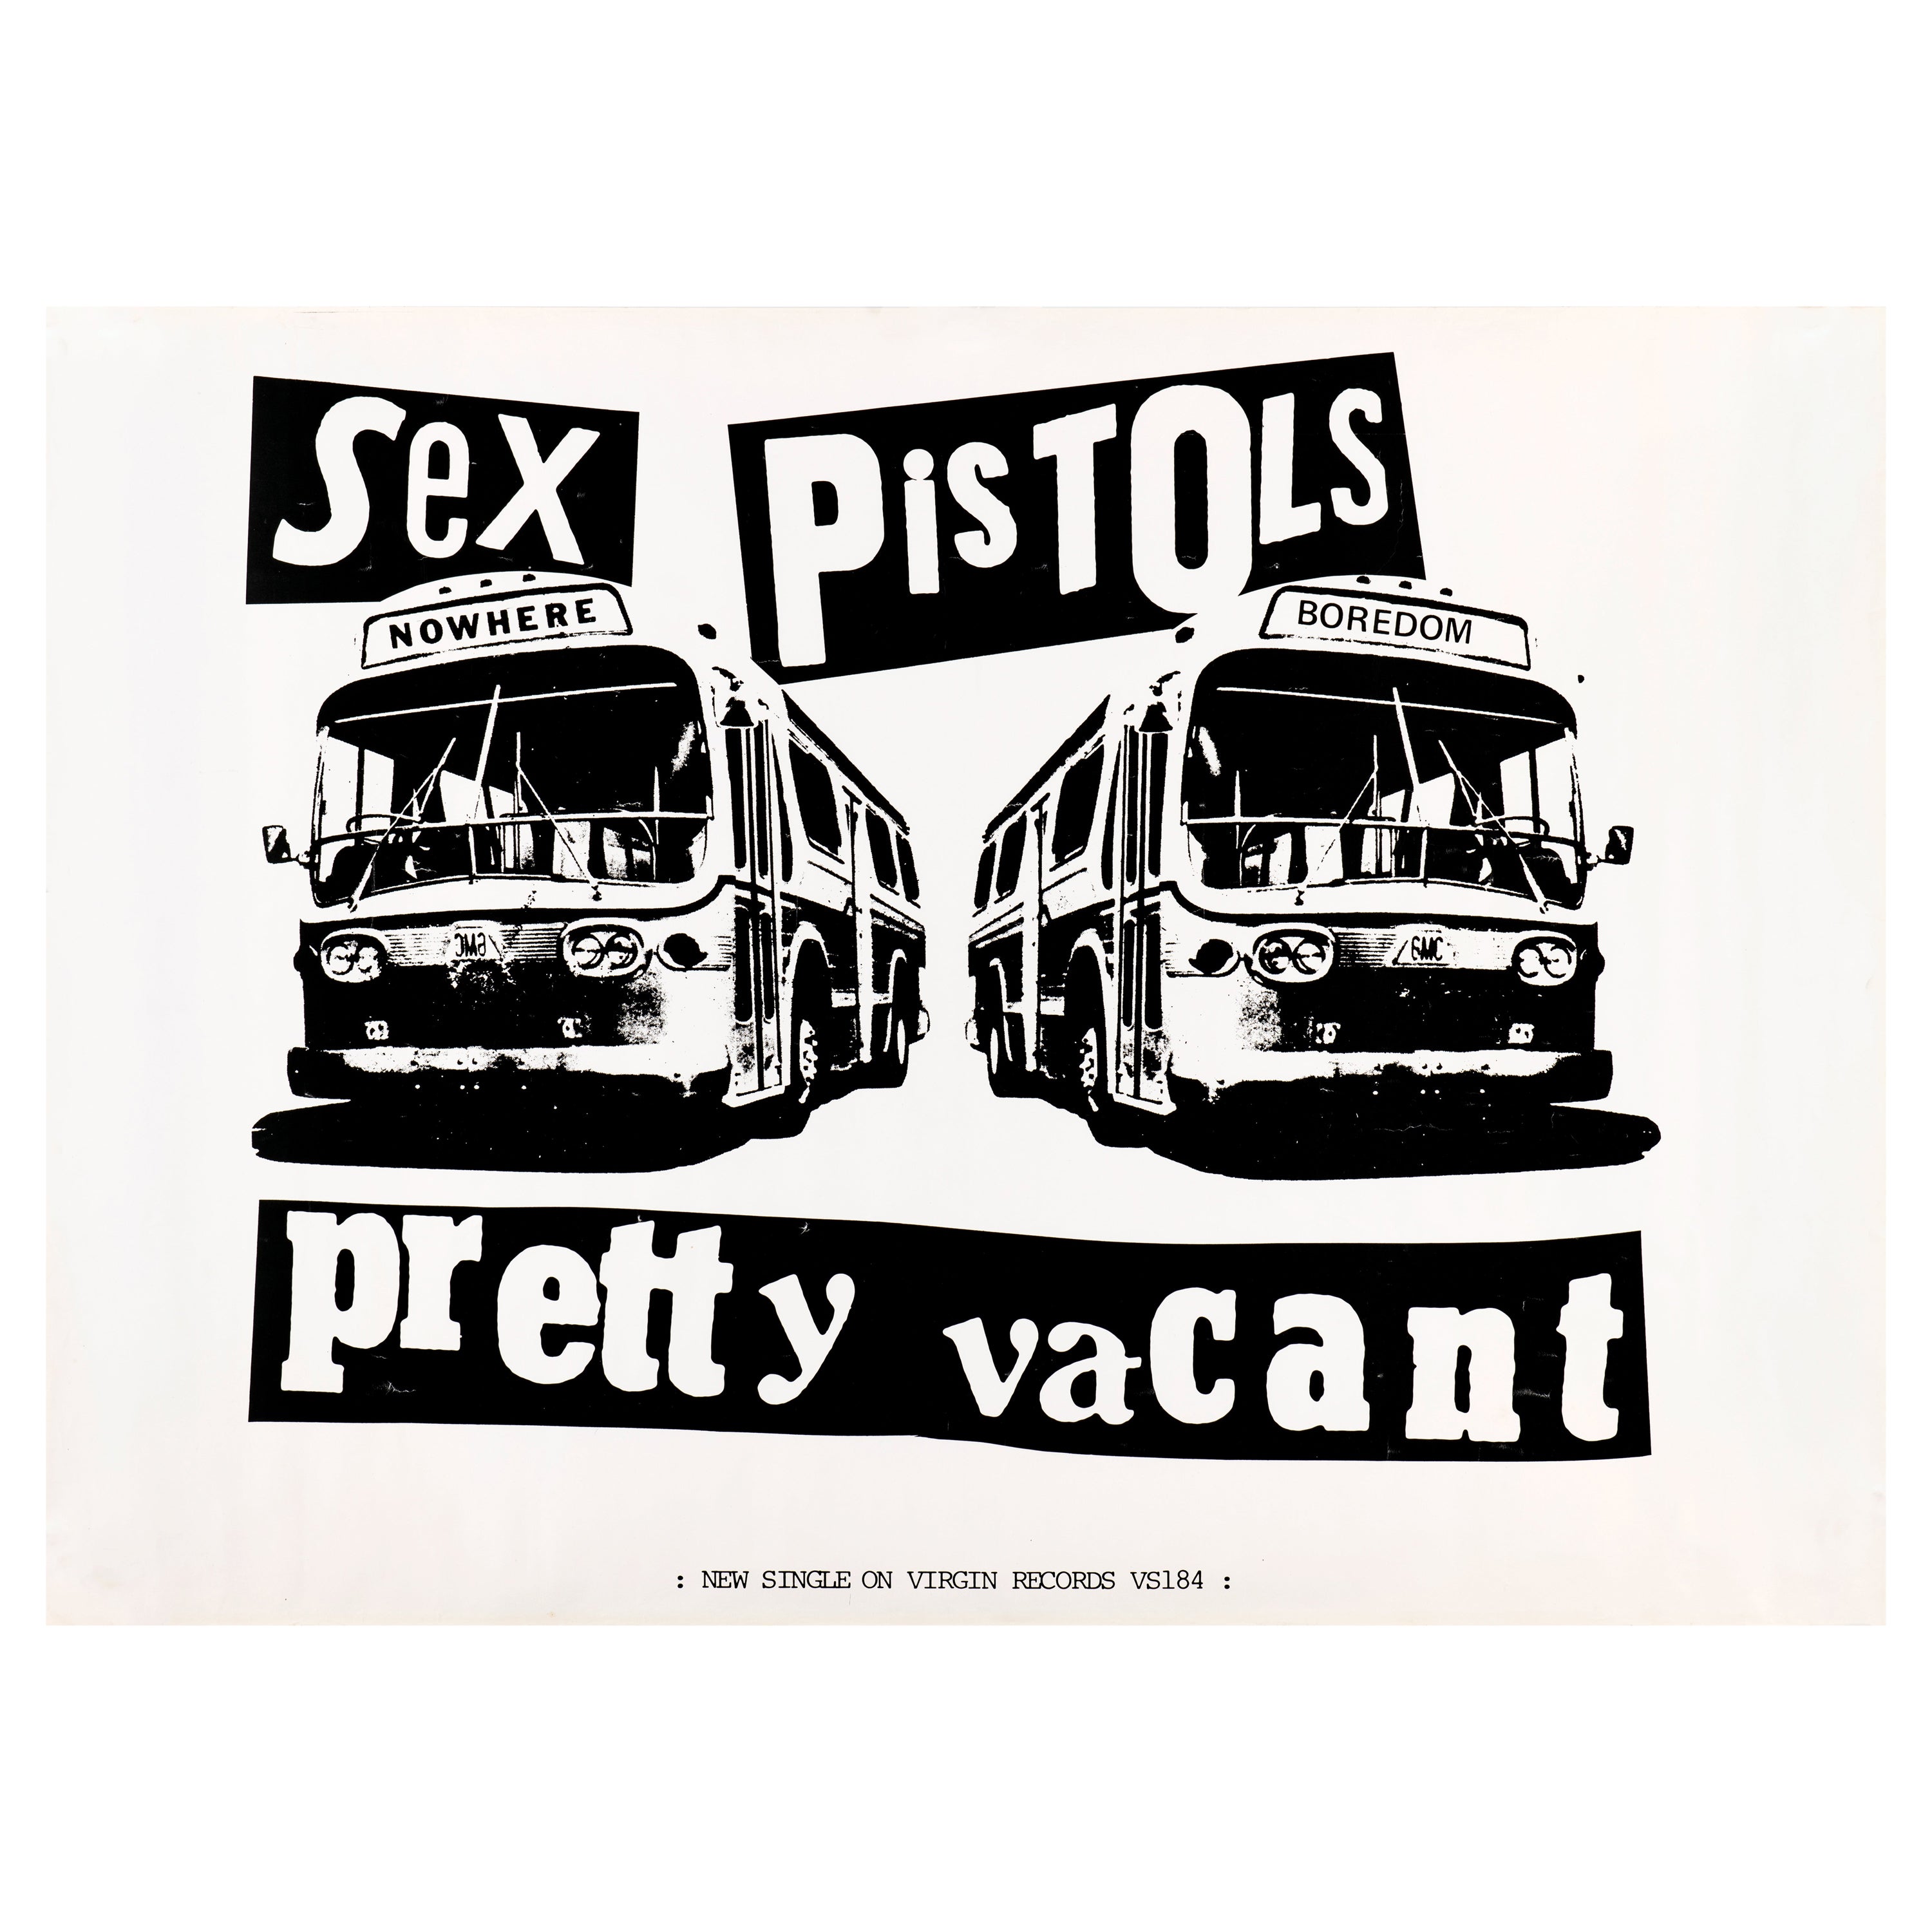 Sex Pistols 'Pretty Vacant' Original Promo Poster by Jamie Reid, British, 1977